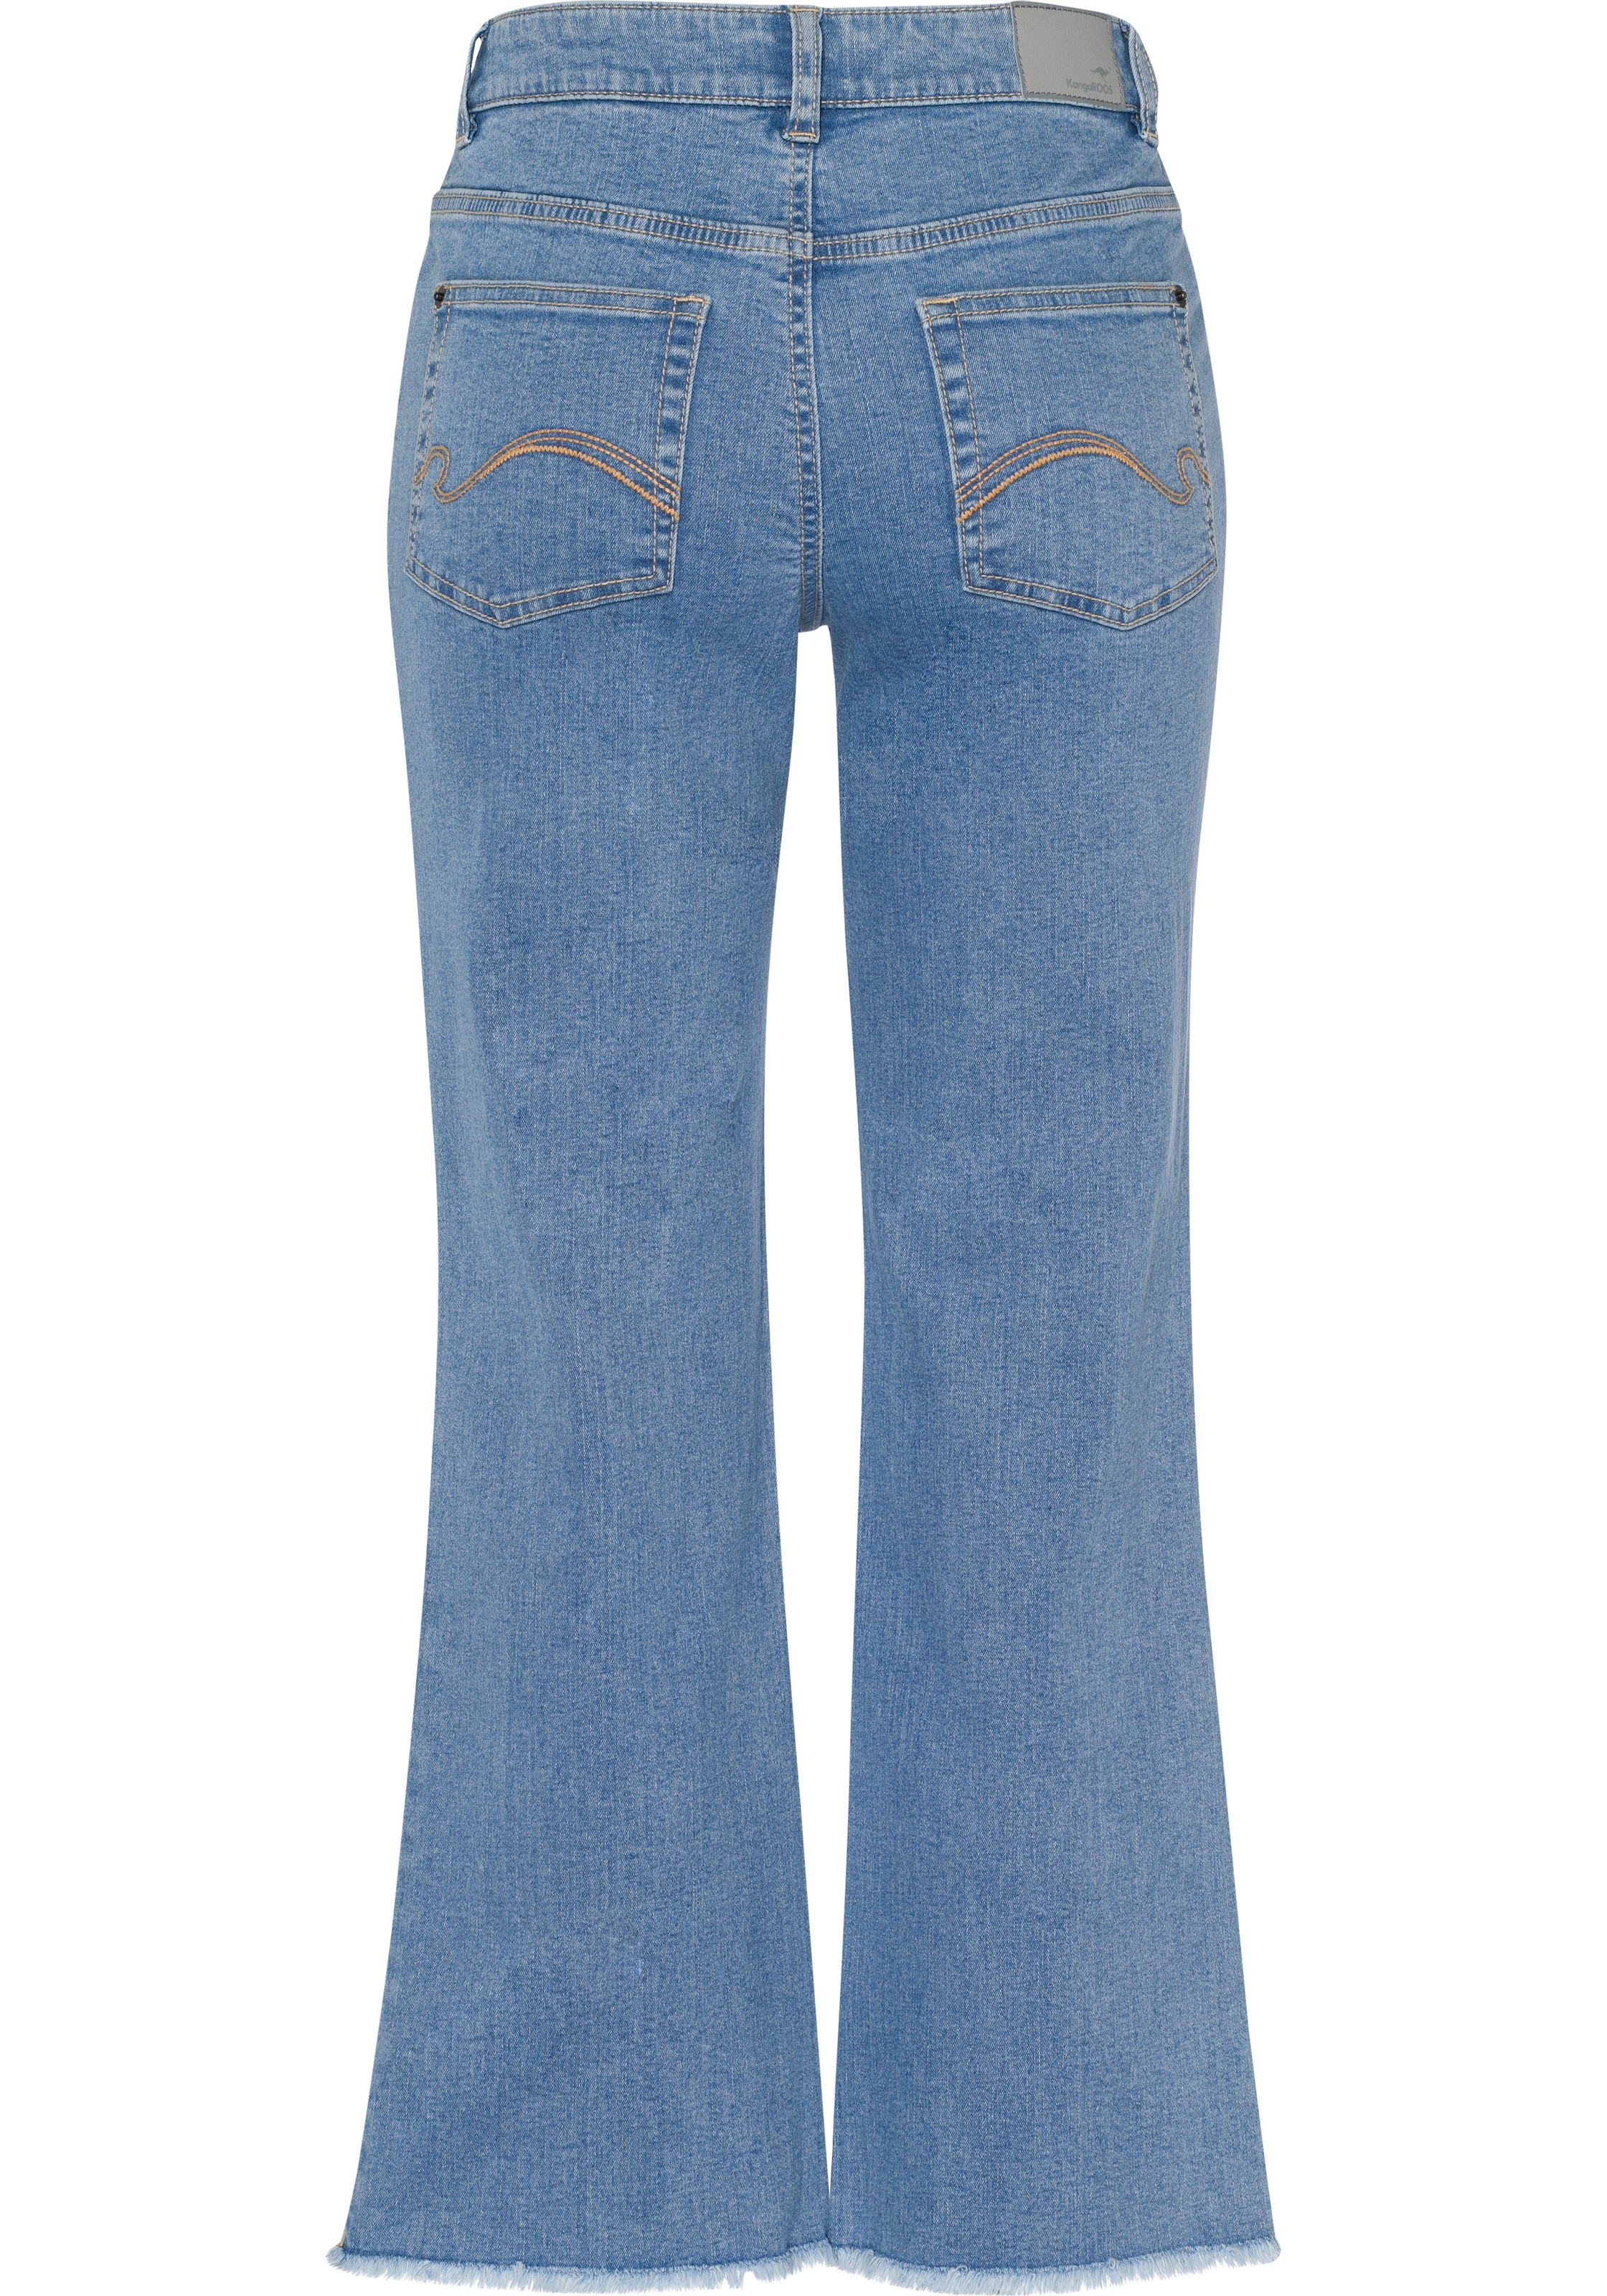 KangaROOS 5-Pocket-Jeans OTTO Online »DENIM Shop CULOTTE«, KOLLEKTION im NEUE